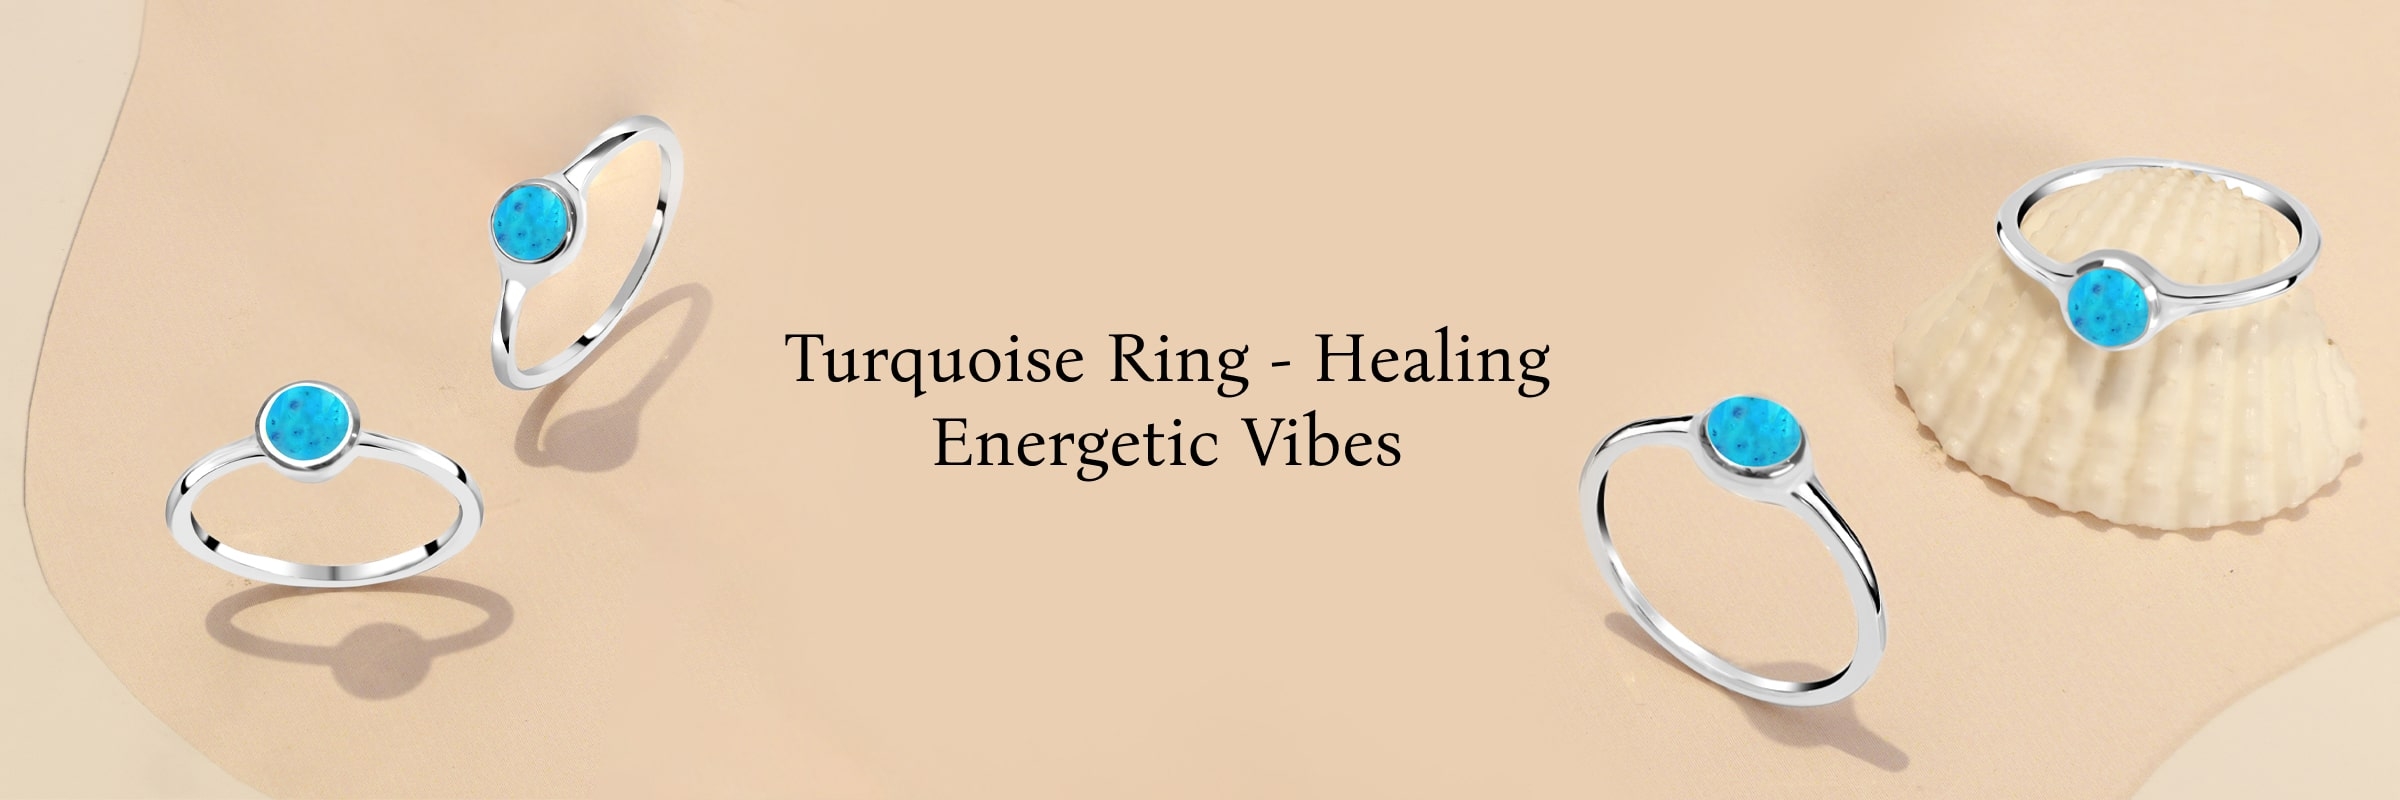 Healing properties of Turquoise ring